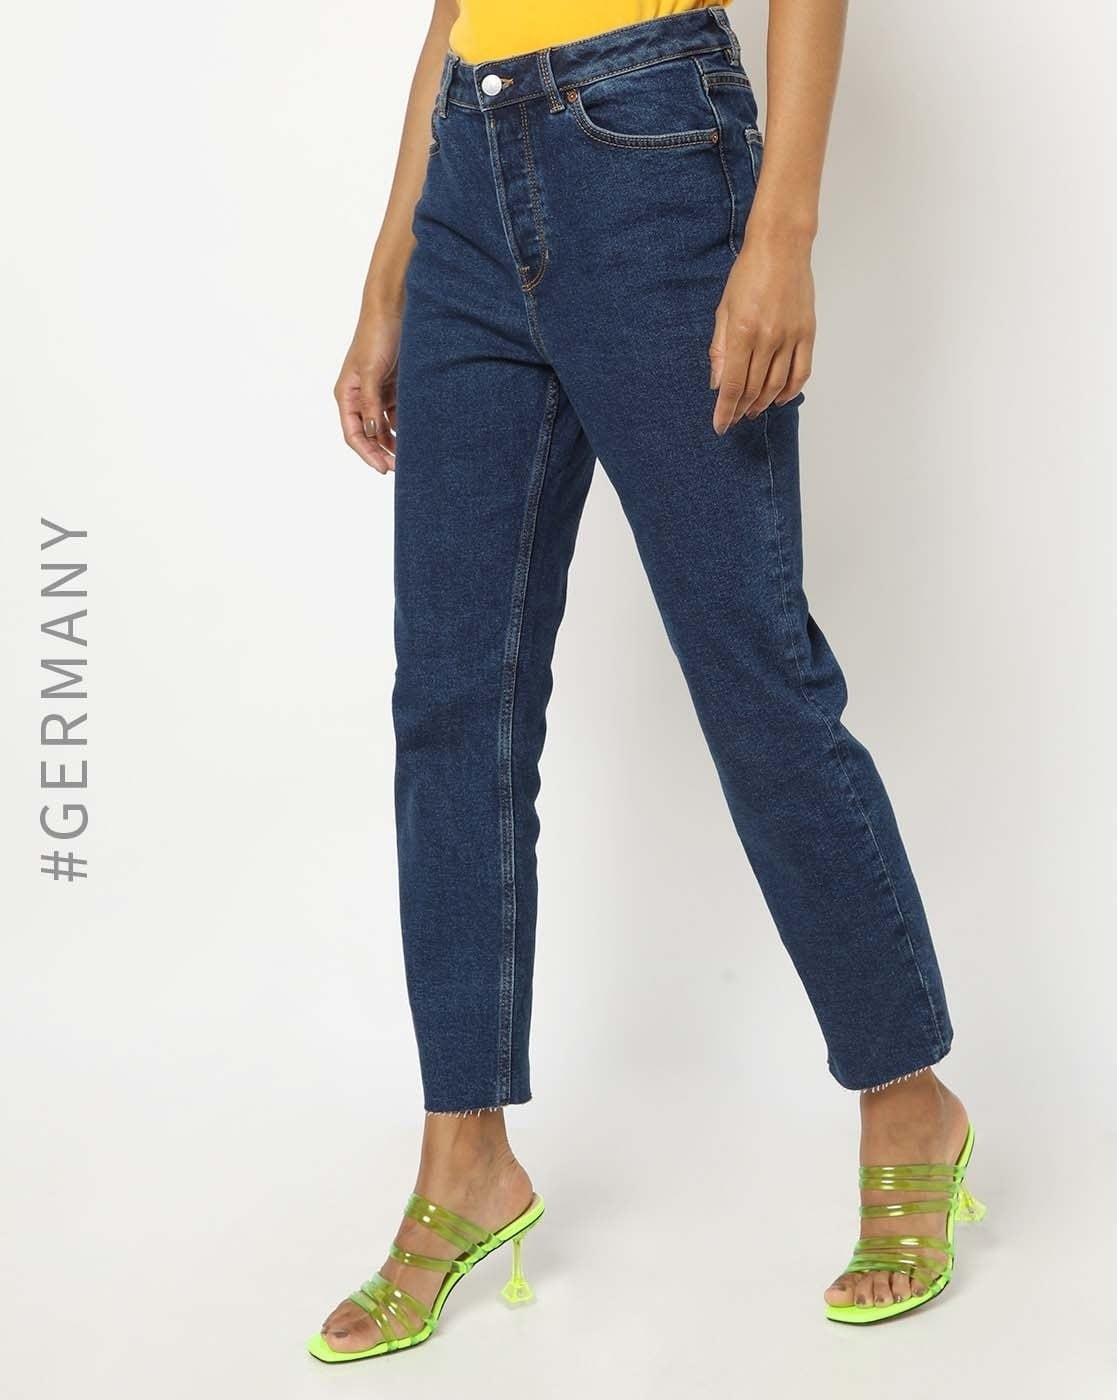 Buy Blue Jeans Tailor Online Tom Women for by & Jeggings